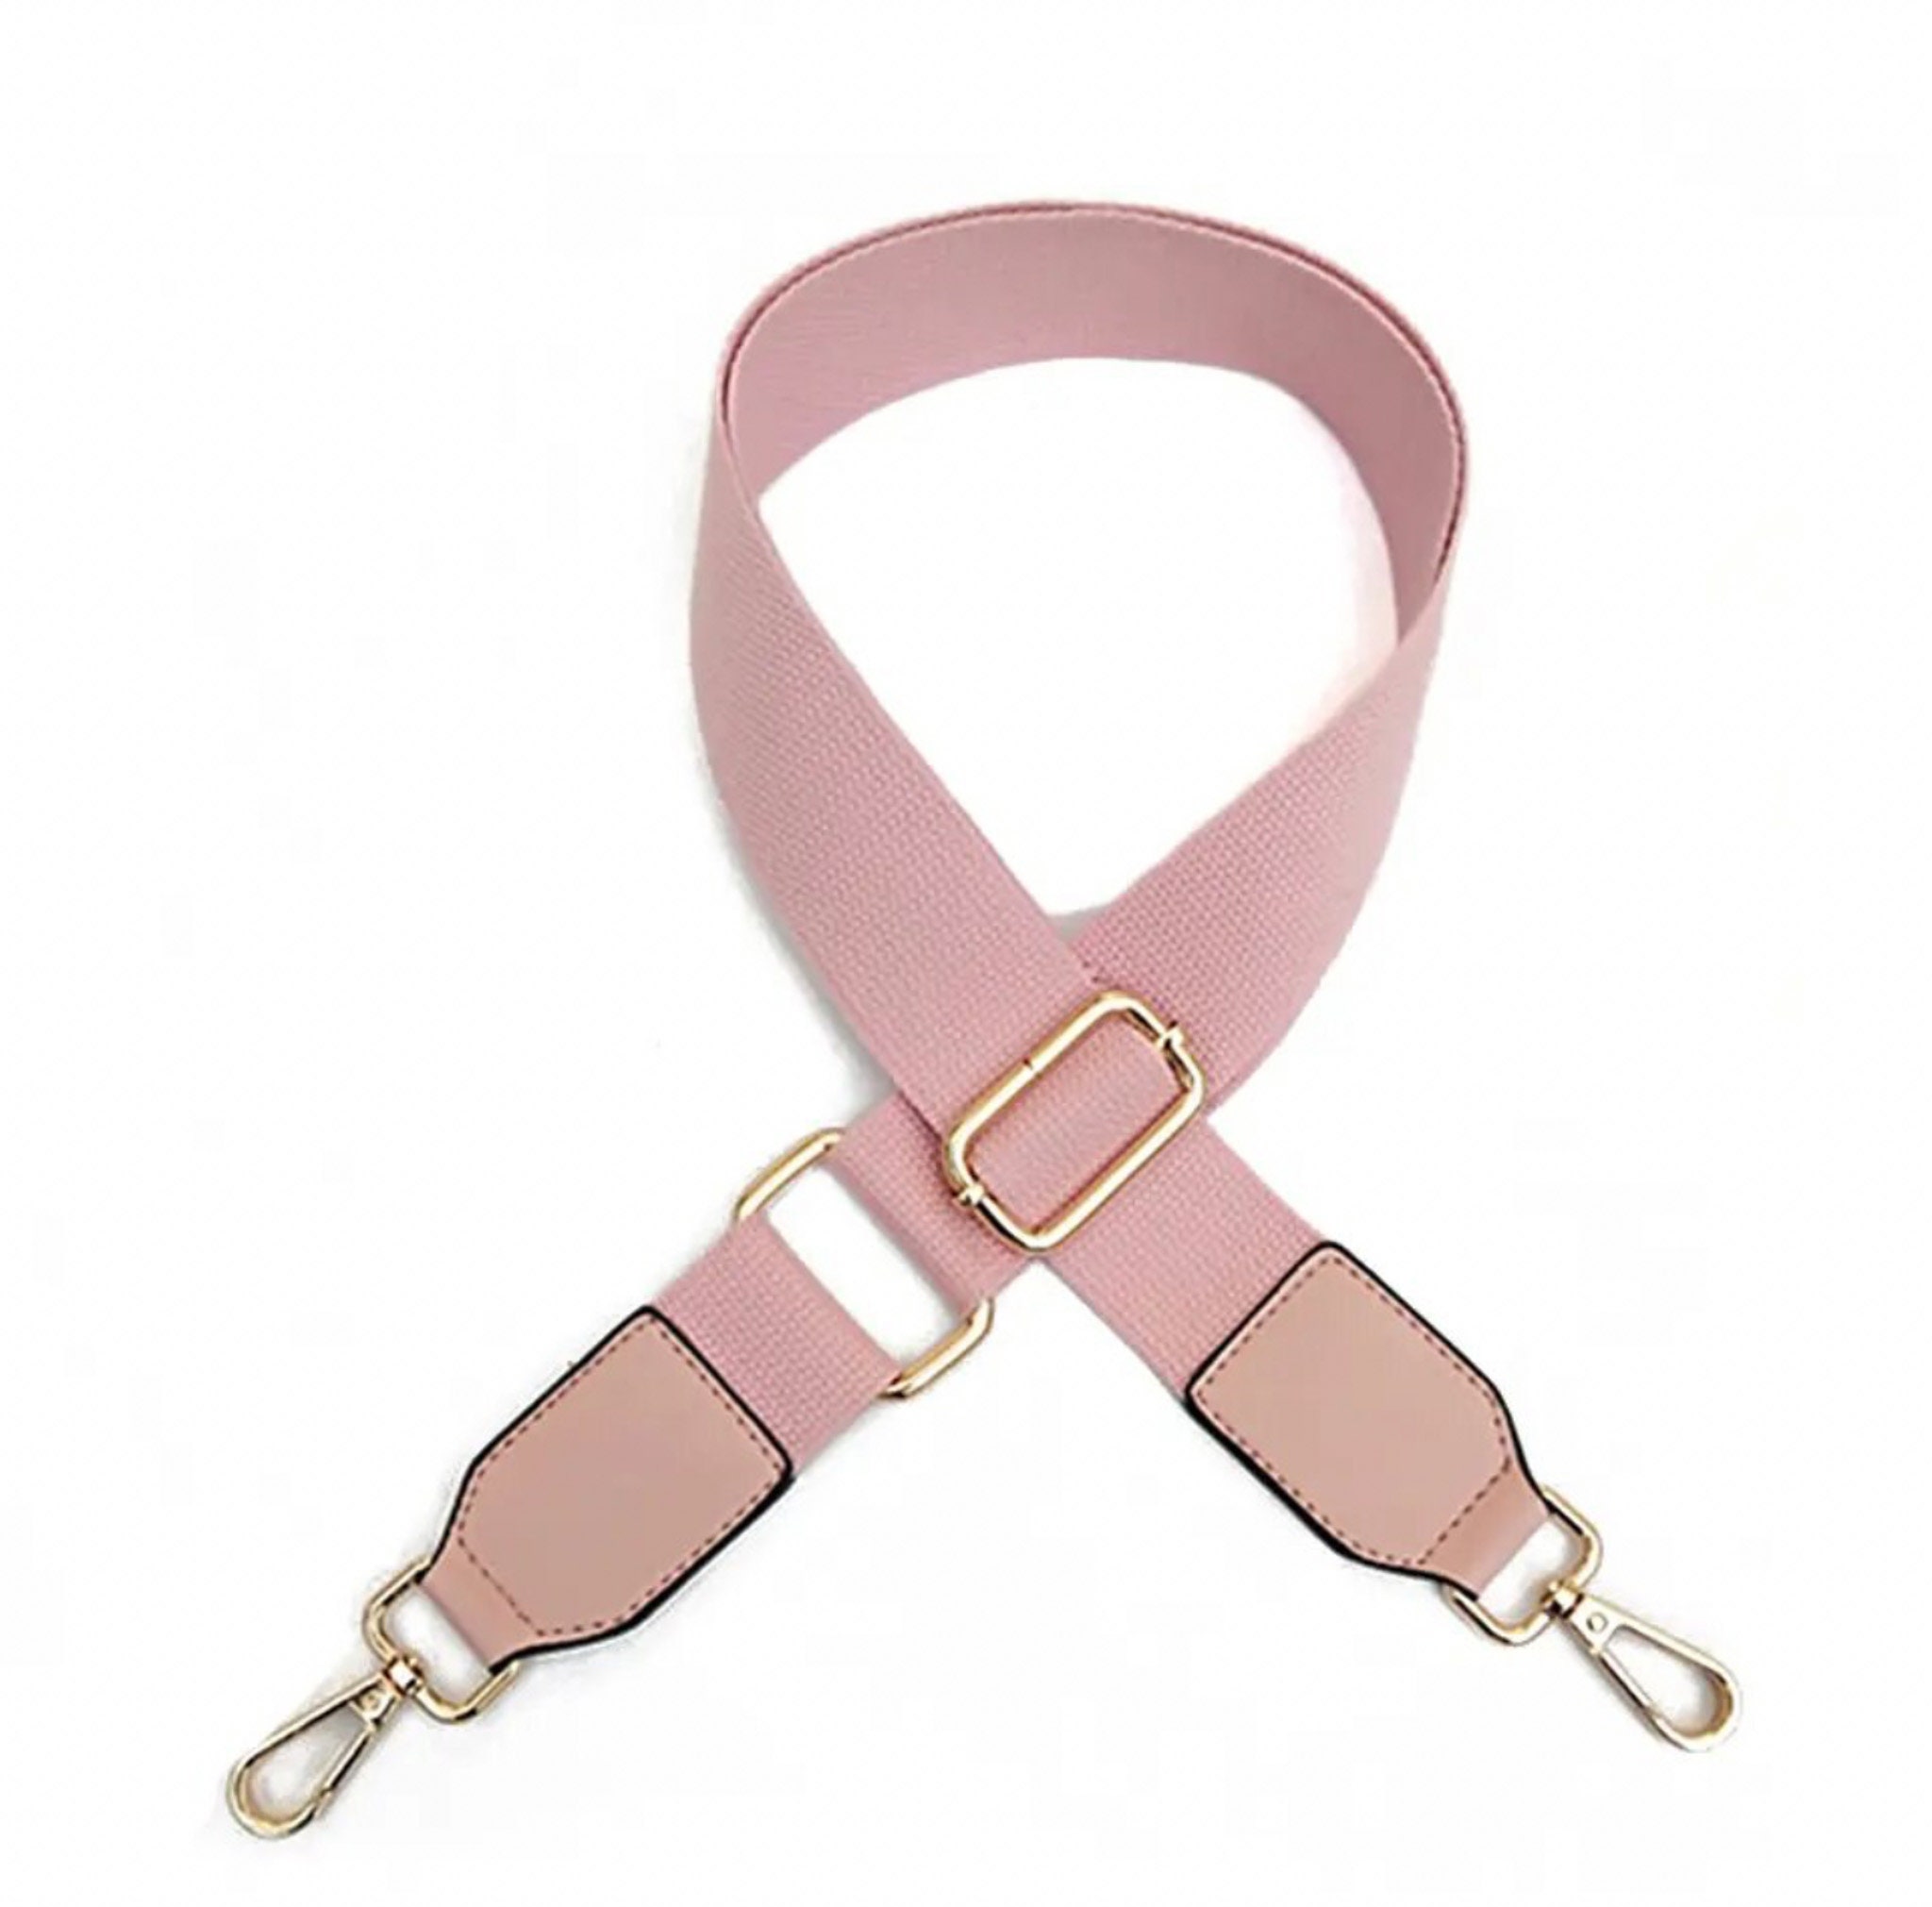 Sunset Color Strap for Purse Handbag - Orange White Pink Rose Colorway #16XLG Gold-Tone